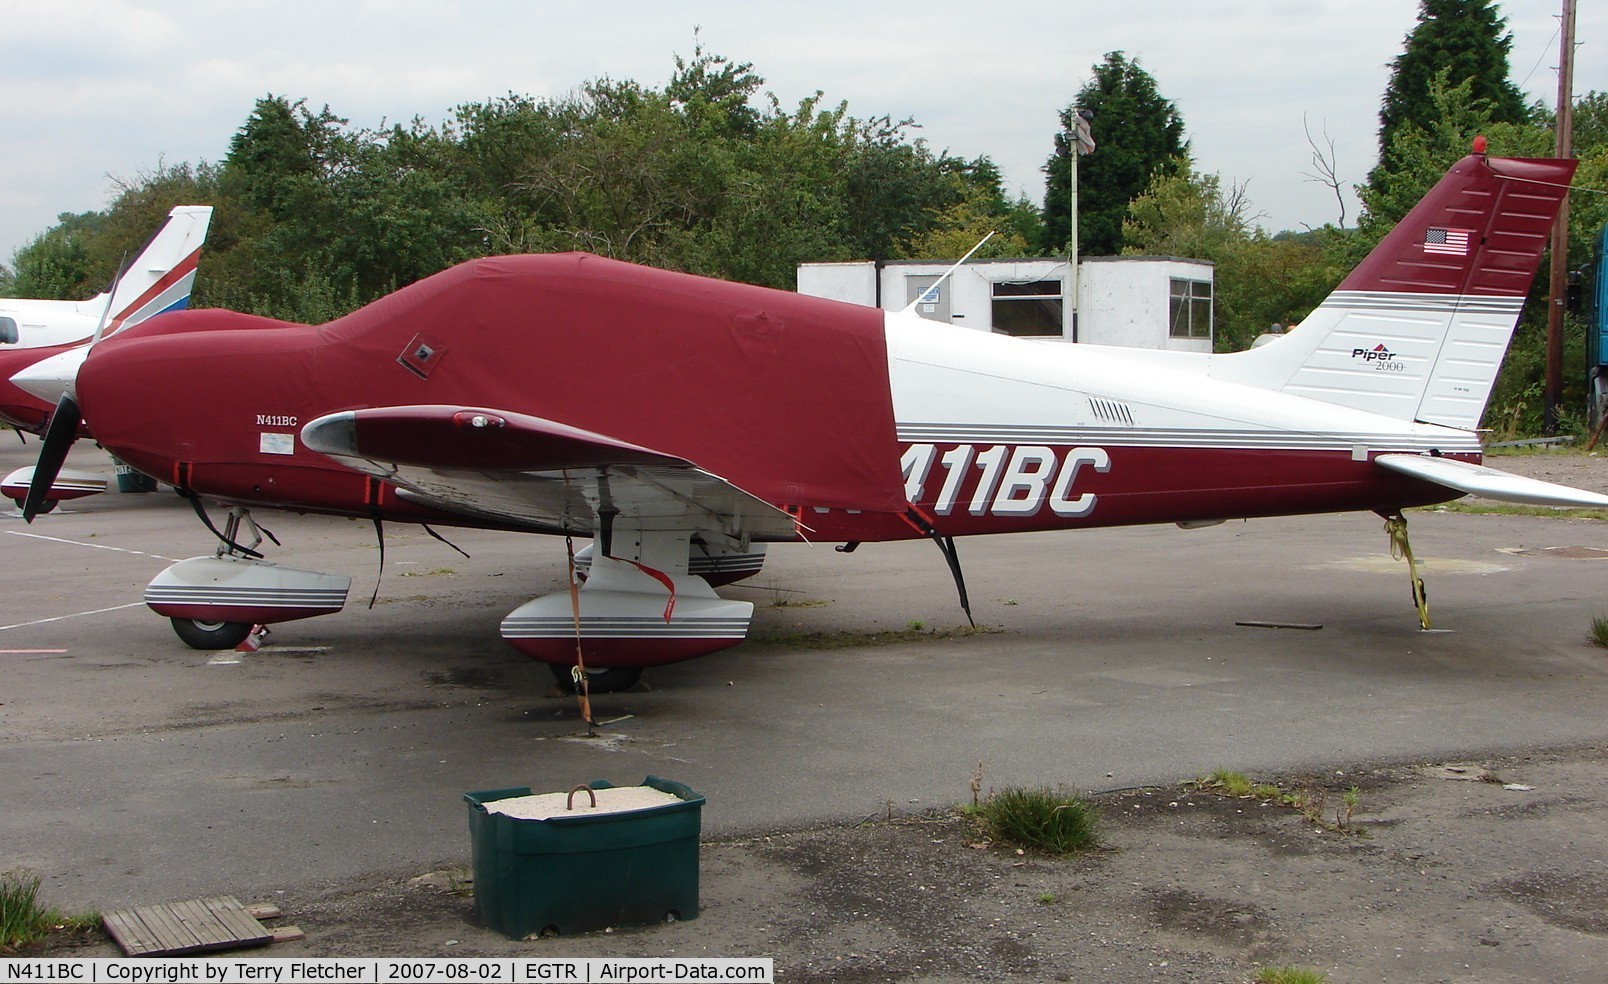 N411BC, 2000 Piper PA-28-181 C/N 2843339, Piper Pa-28-181